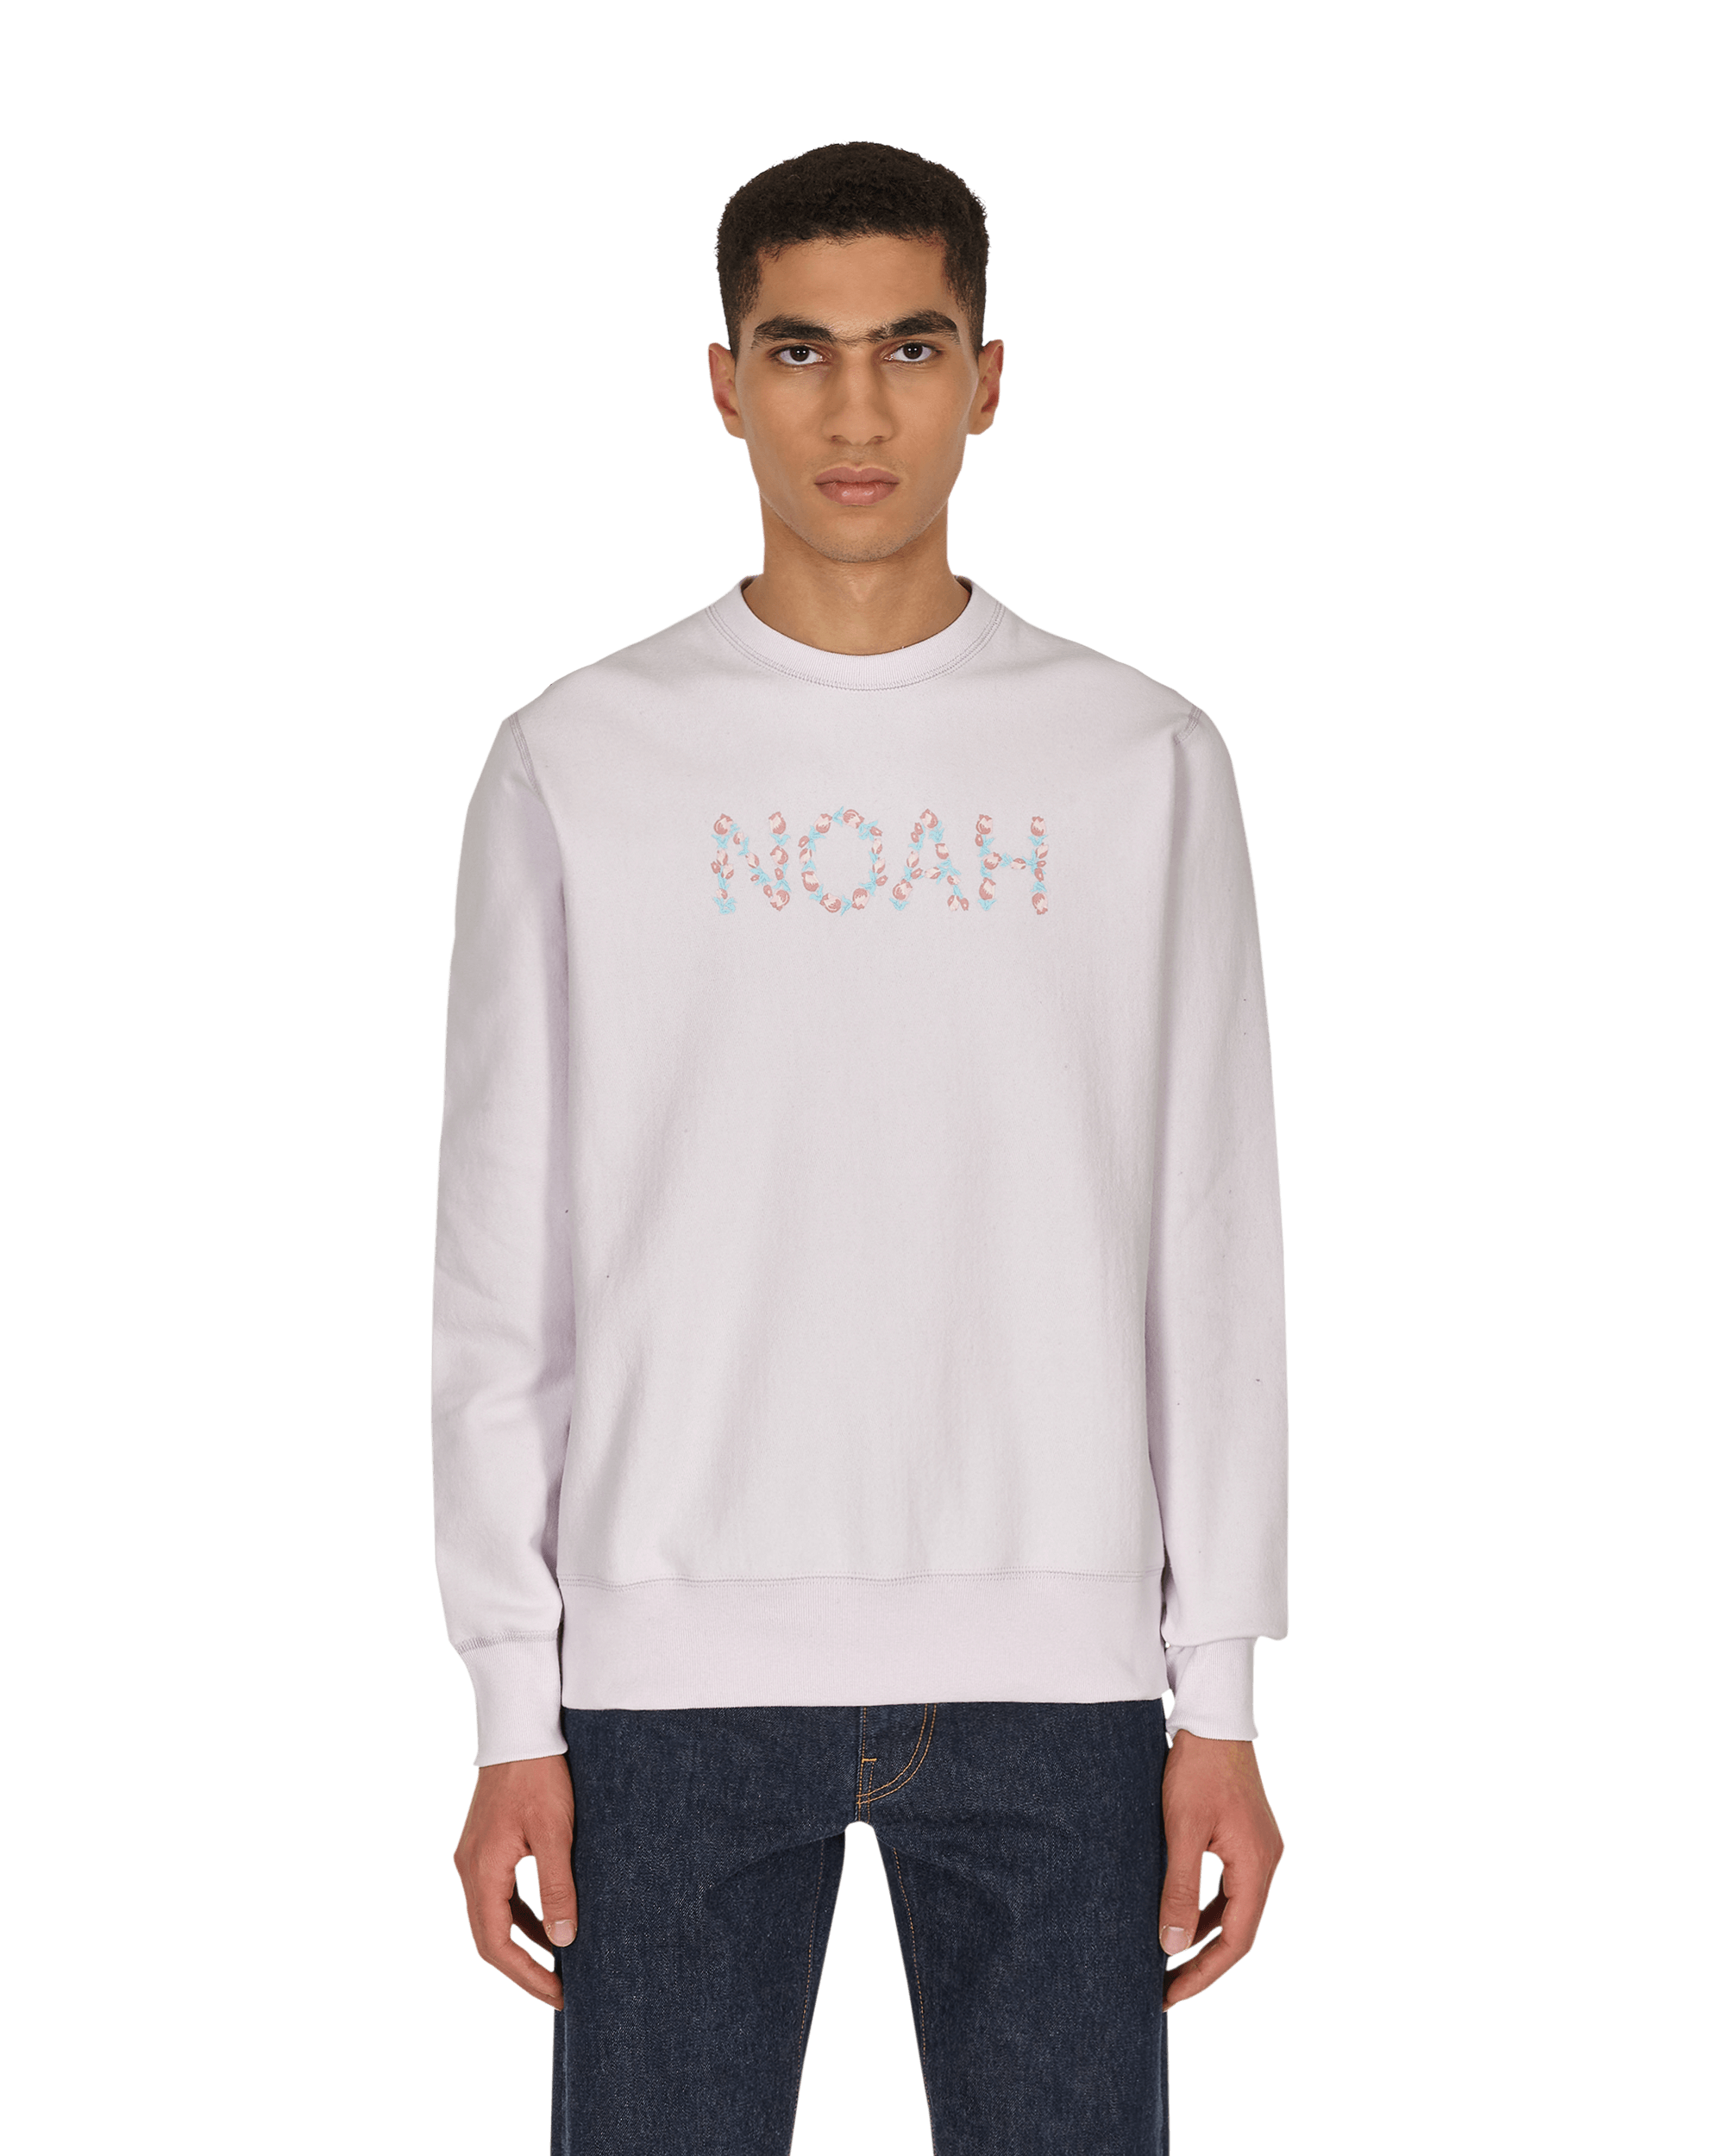 Noah Tulip Lightweight Orchid Ice Sweatshirts Crewneck SS22SS21 ODI